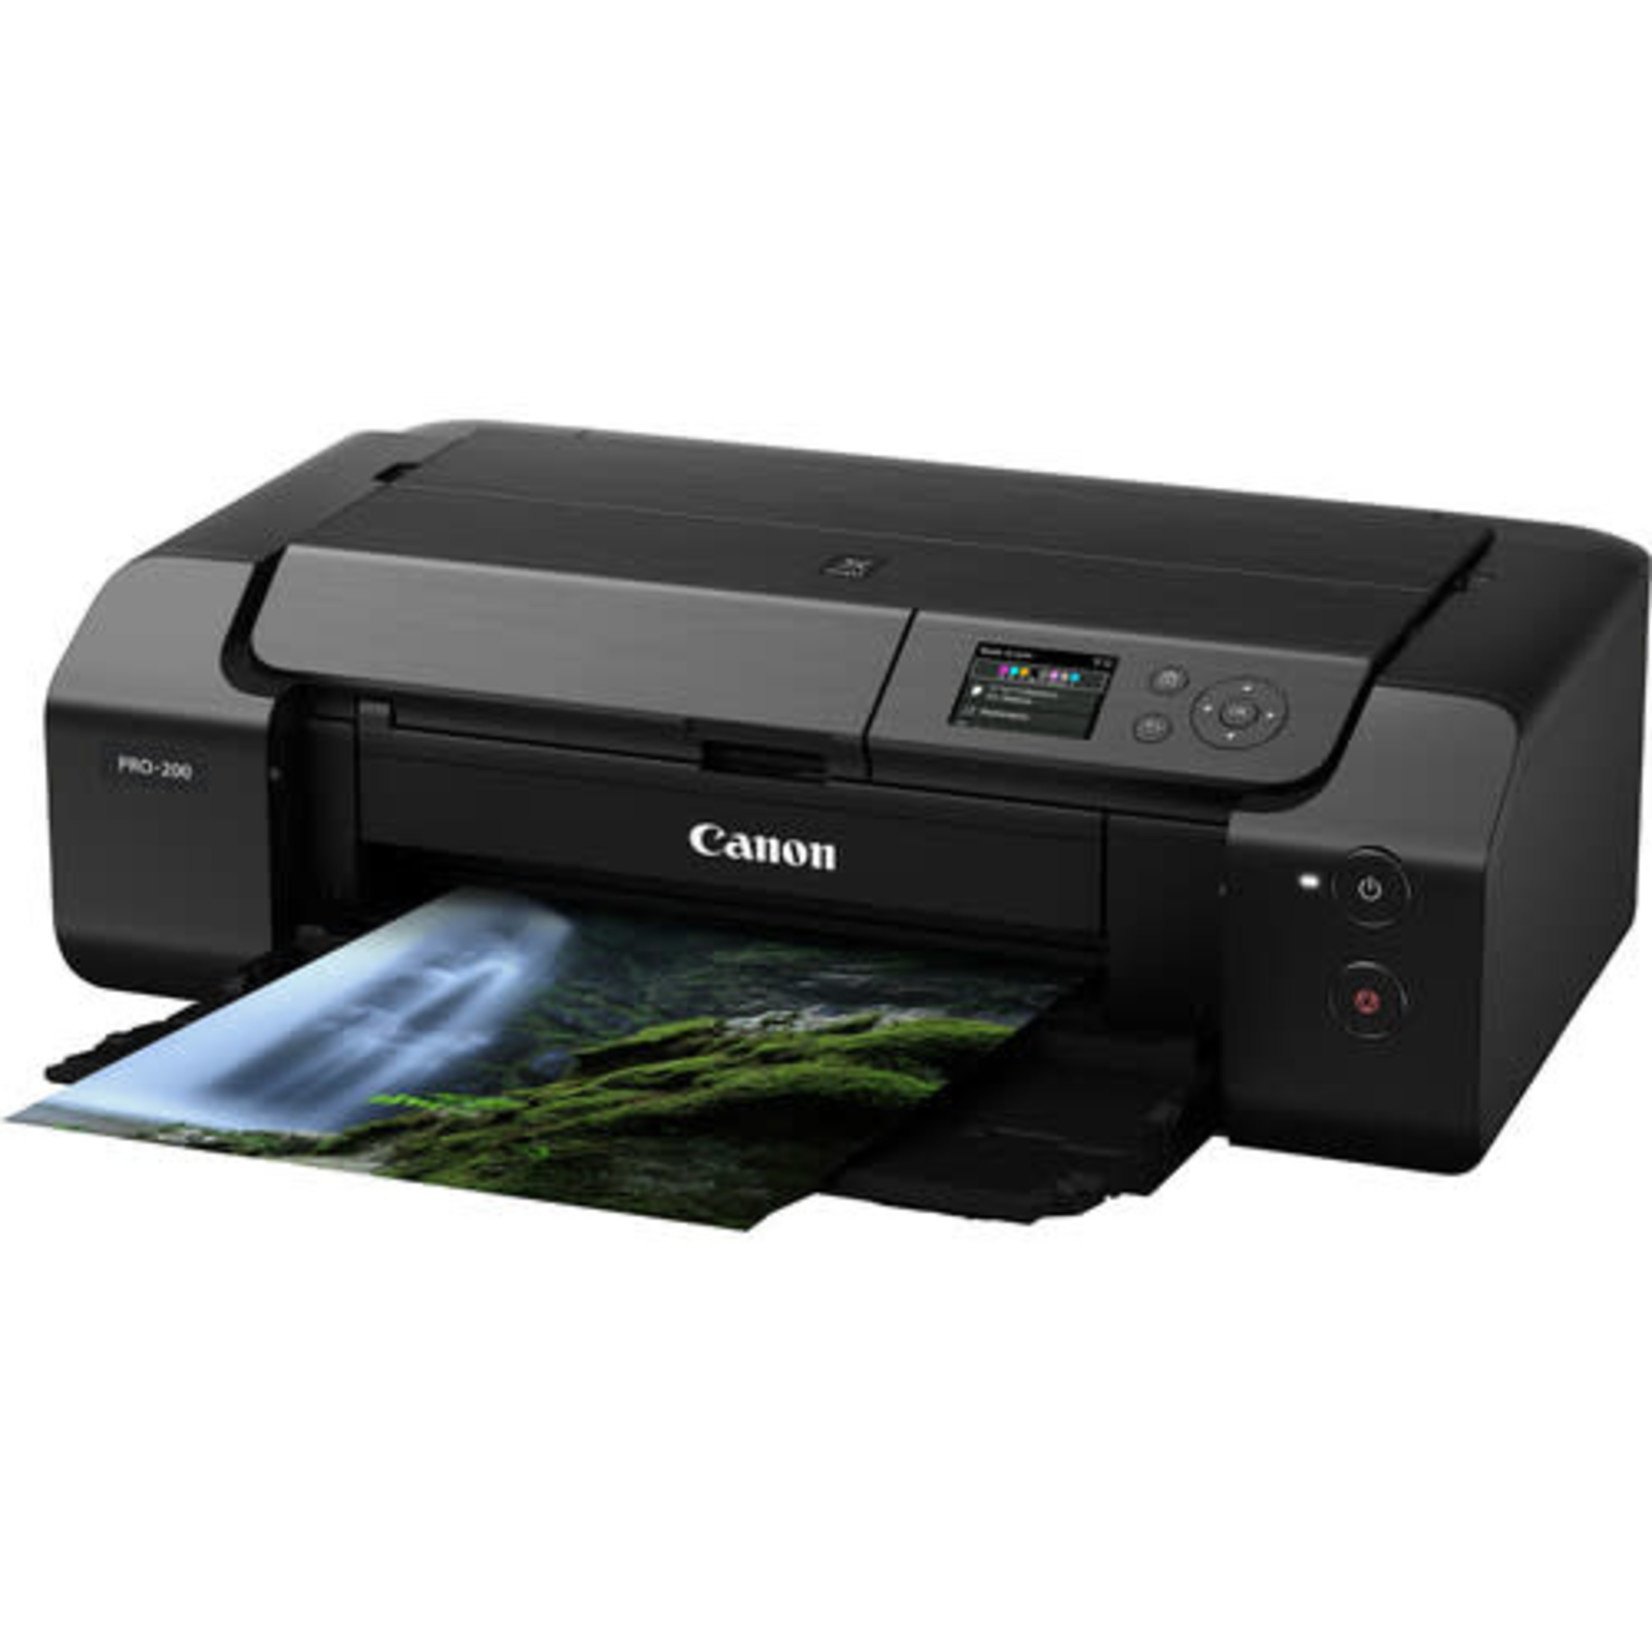 Canon Canon PIXMA PRO-200 Wireless Professional Inkjet Photo Printer